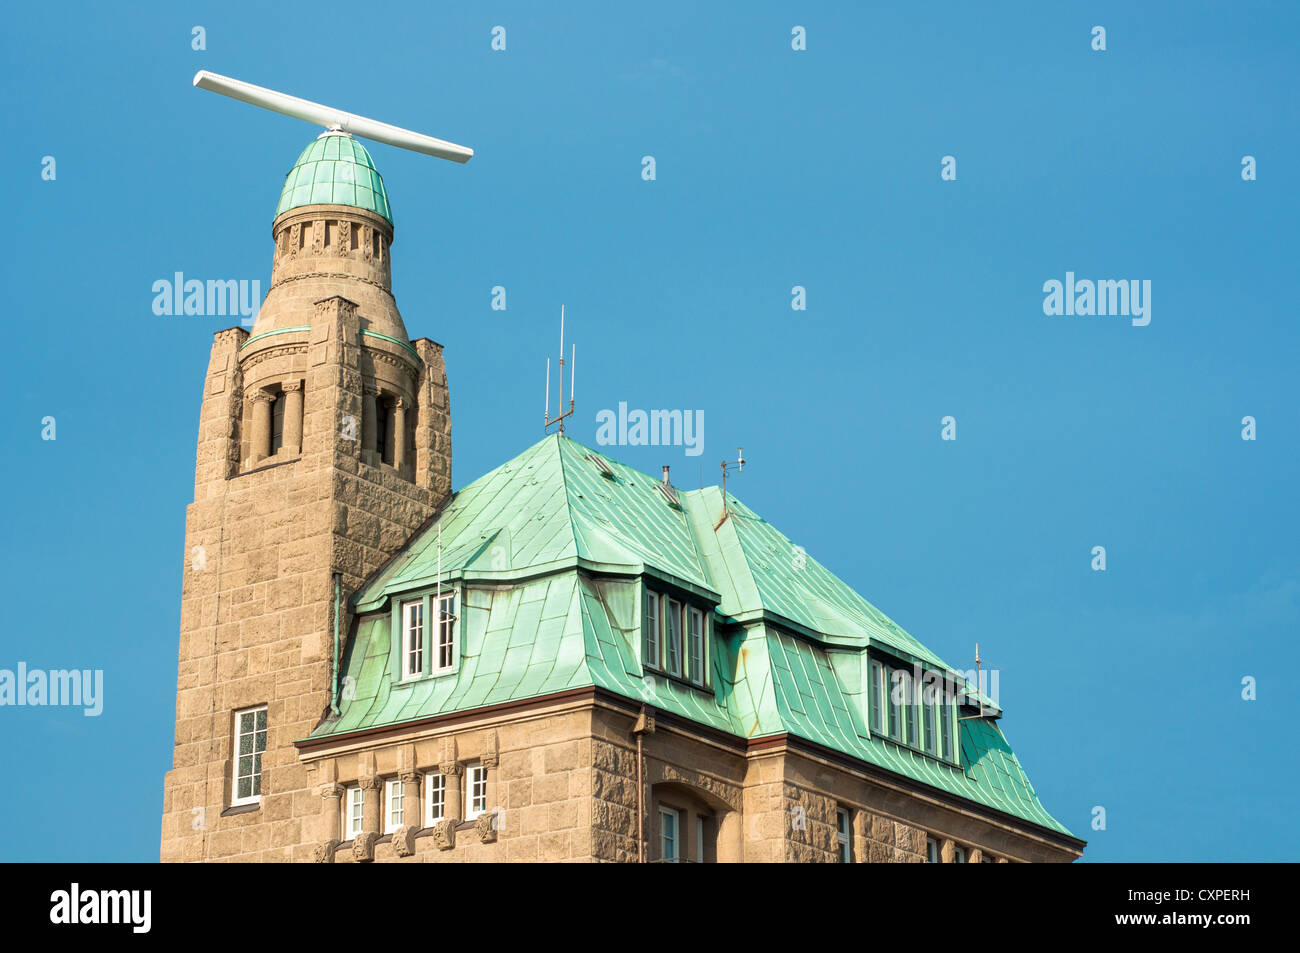 Abfertigungsgebäude Landungsbrücken, Amburgo. Torre del radar per la sorveglianza costiera o sistema di gestione del traffico marittimo Foto Stock